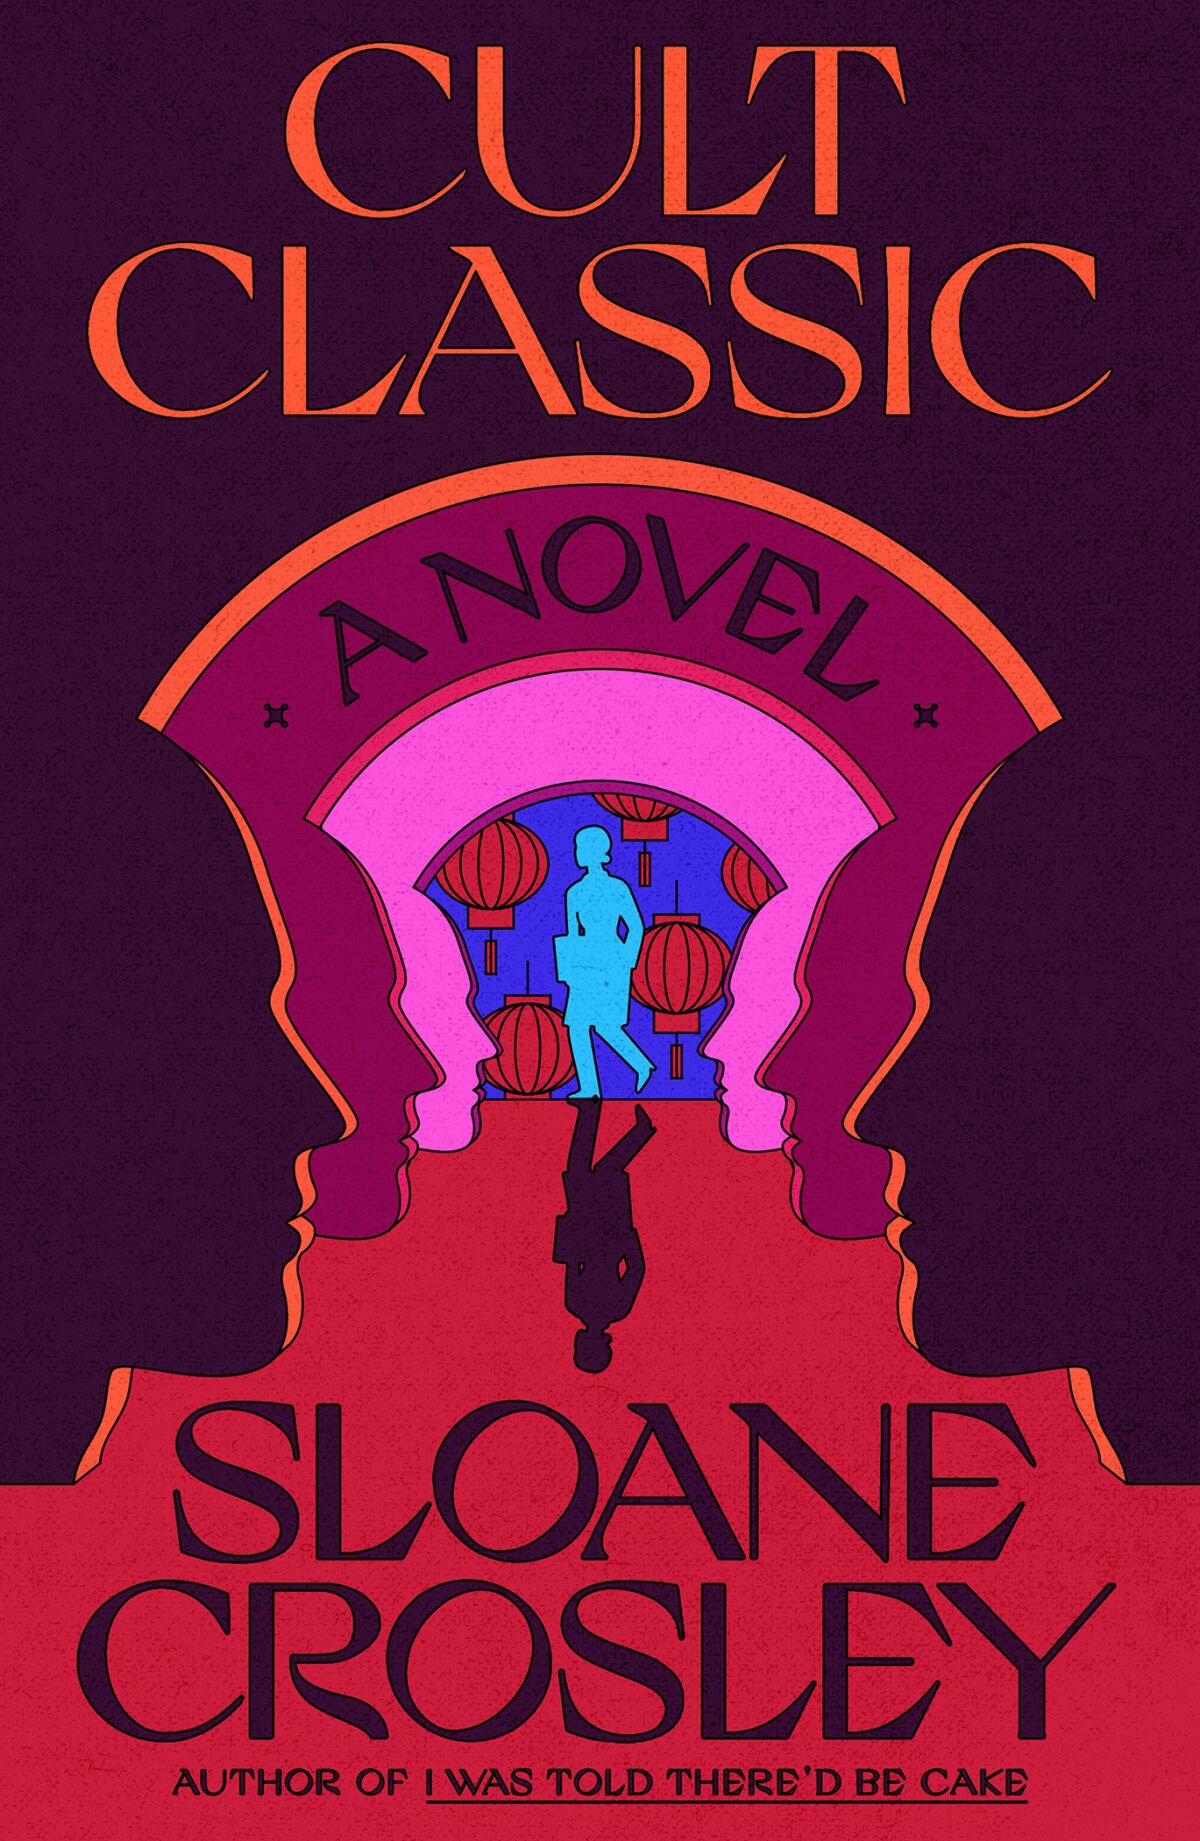 "Cult Classic" by Sloane Crosley